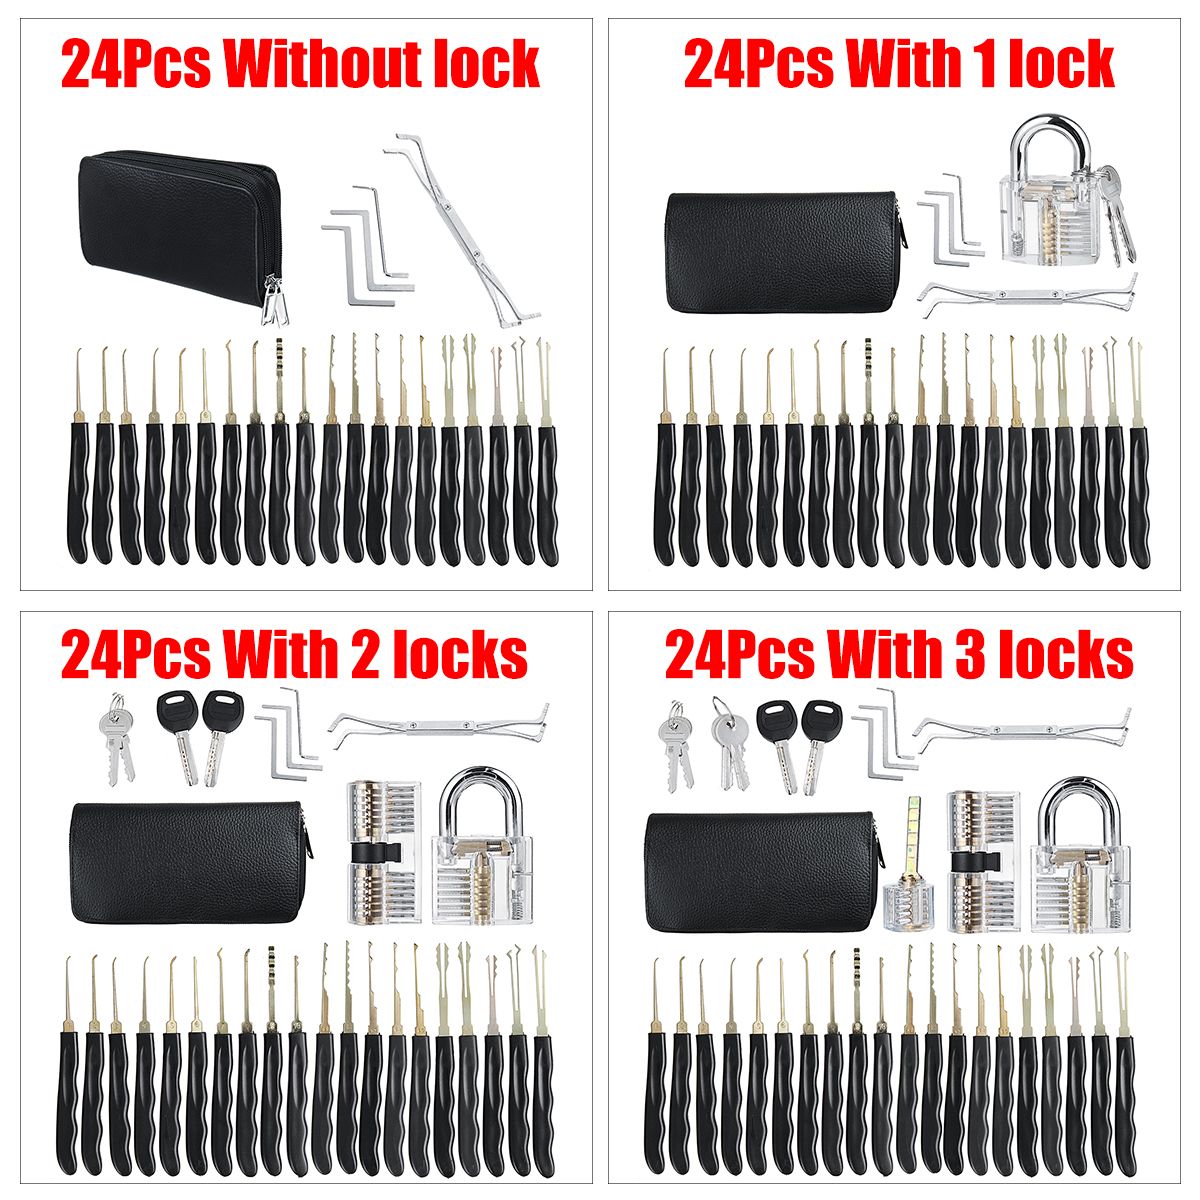 15Pcs24Pcs-Lock-Unlocking-Picking-Tool-Set-With-3-Transparent-Practice-Training-Lock-1688100